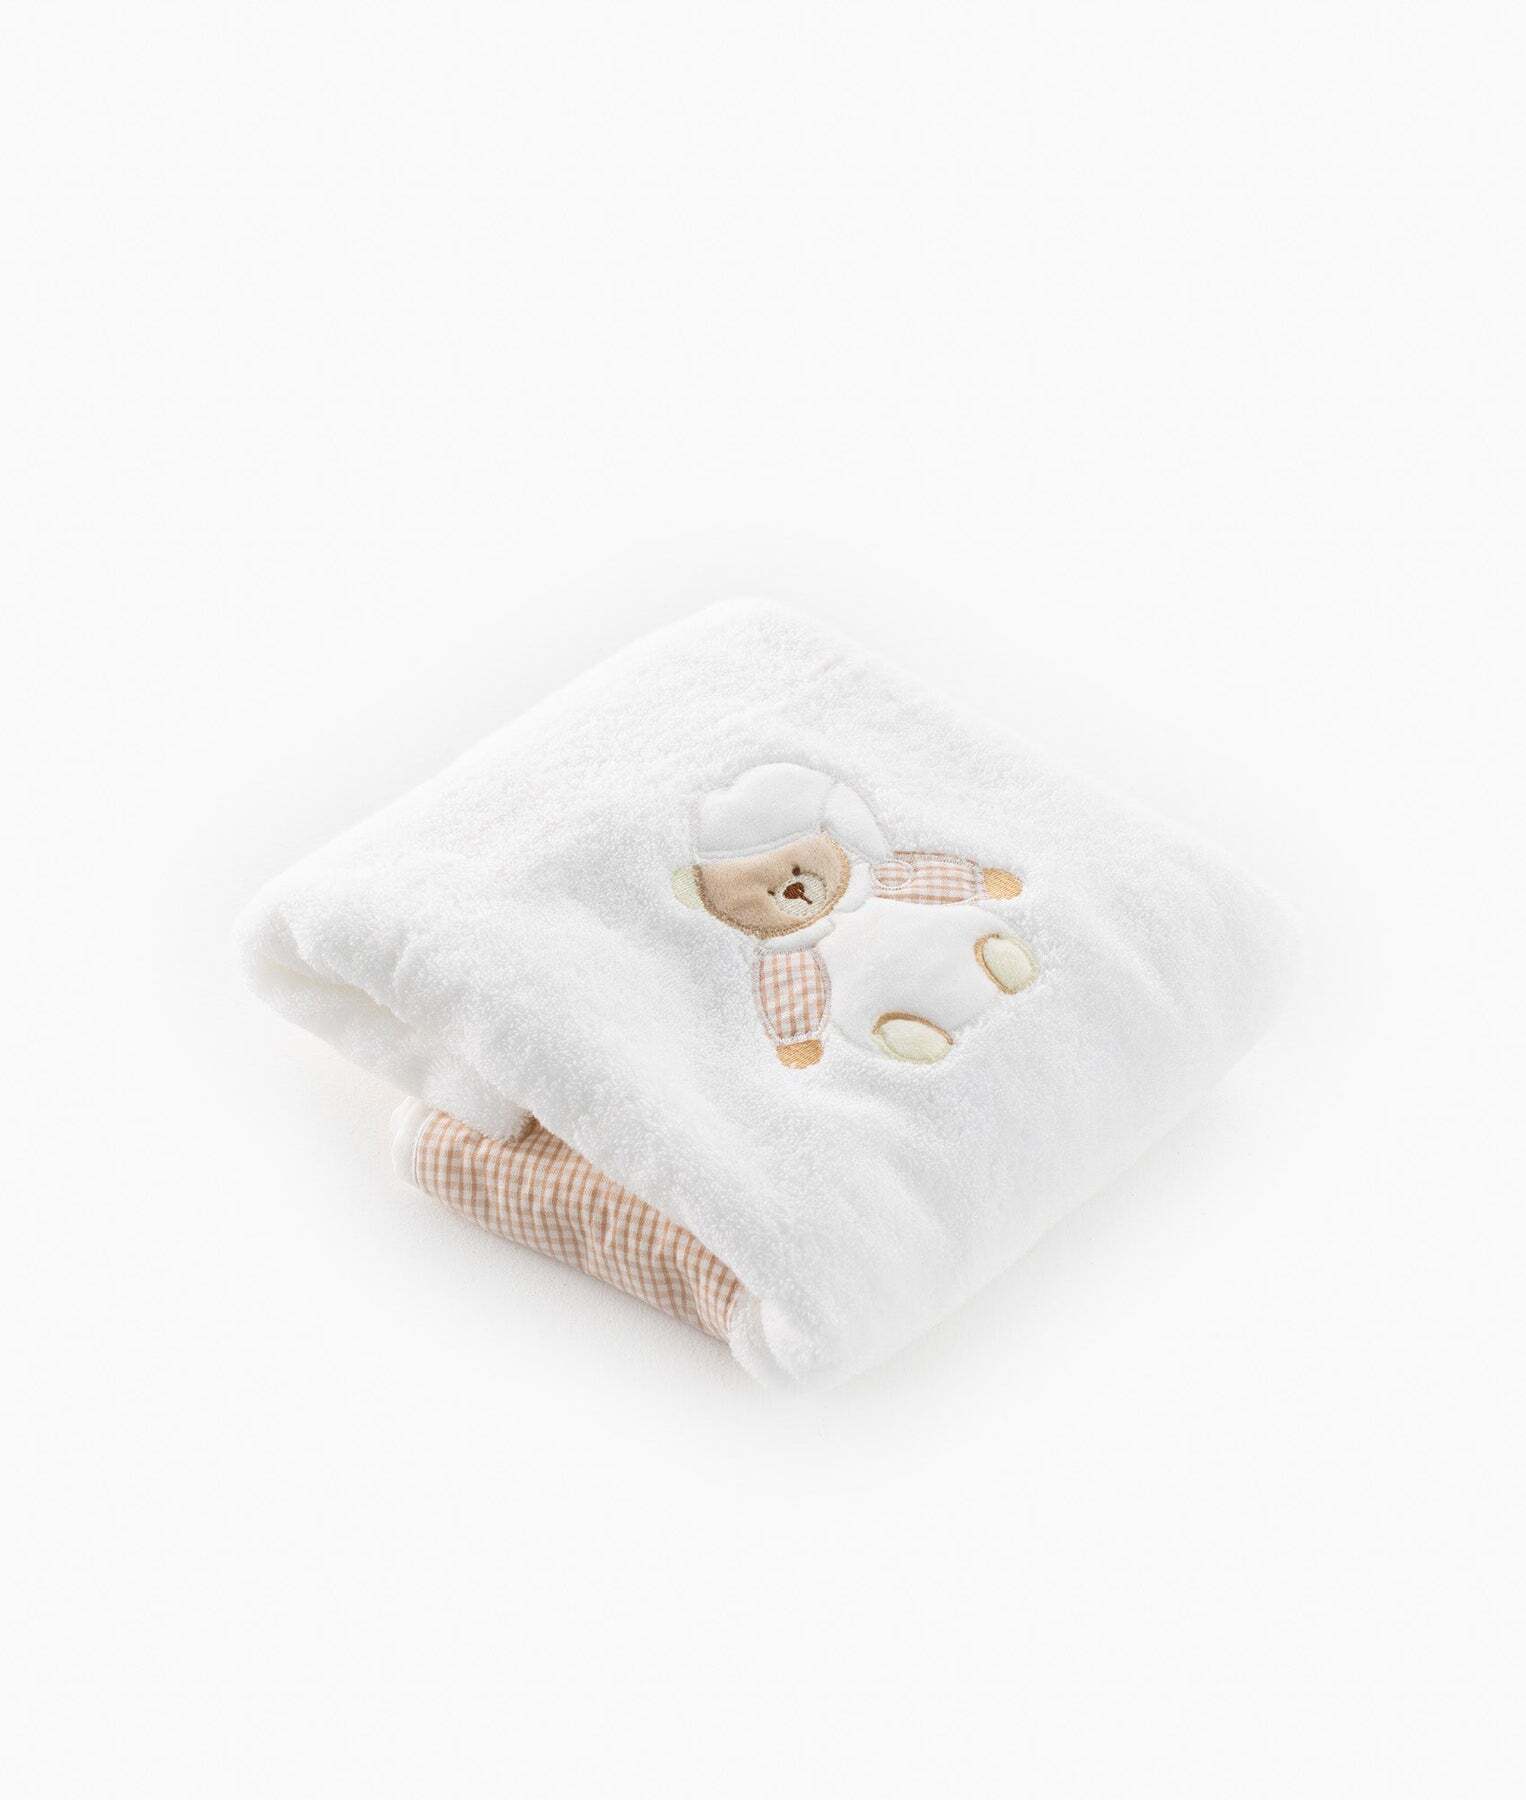 2pc-towel-set-beige-460_1800x1800